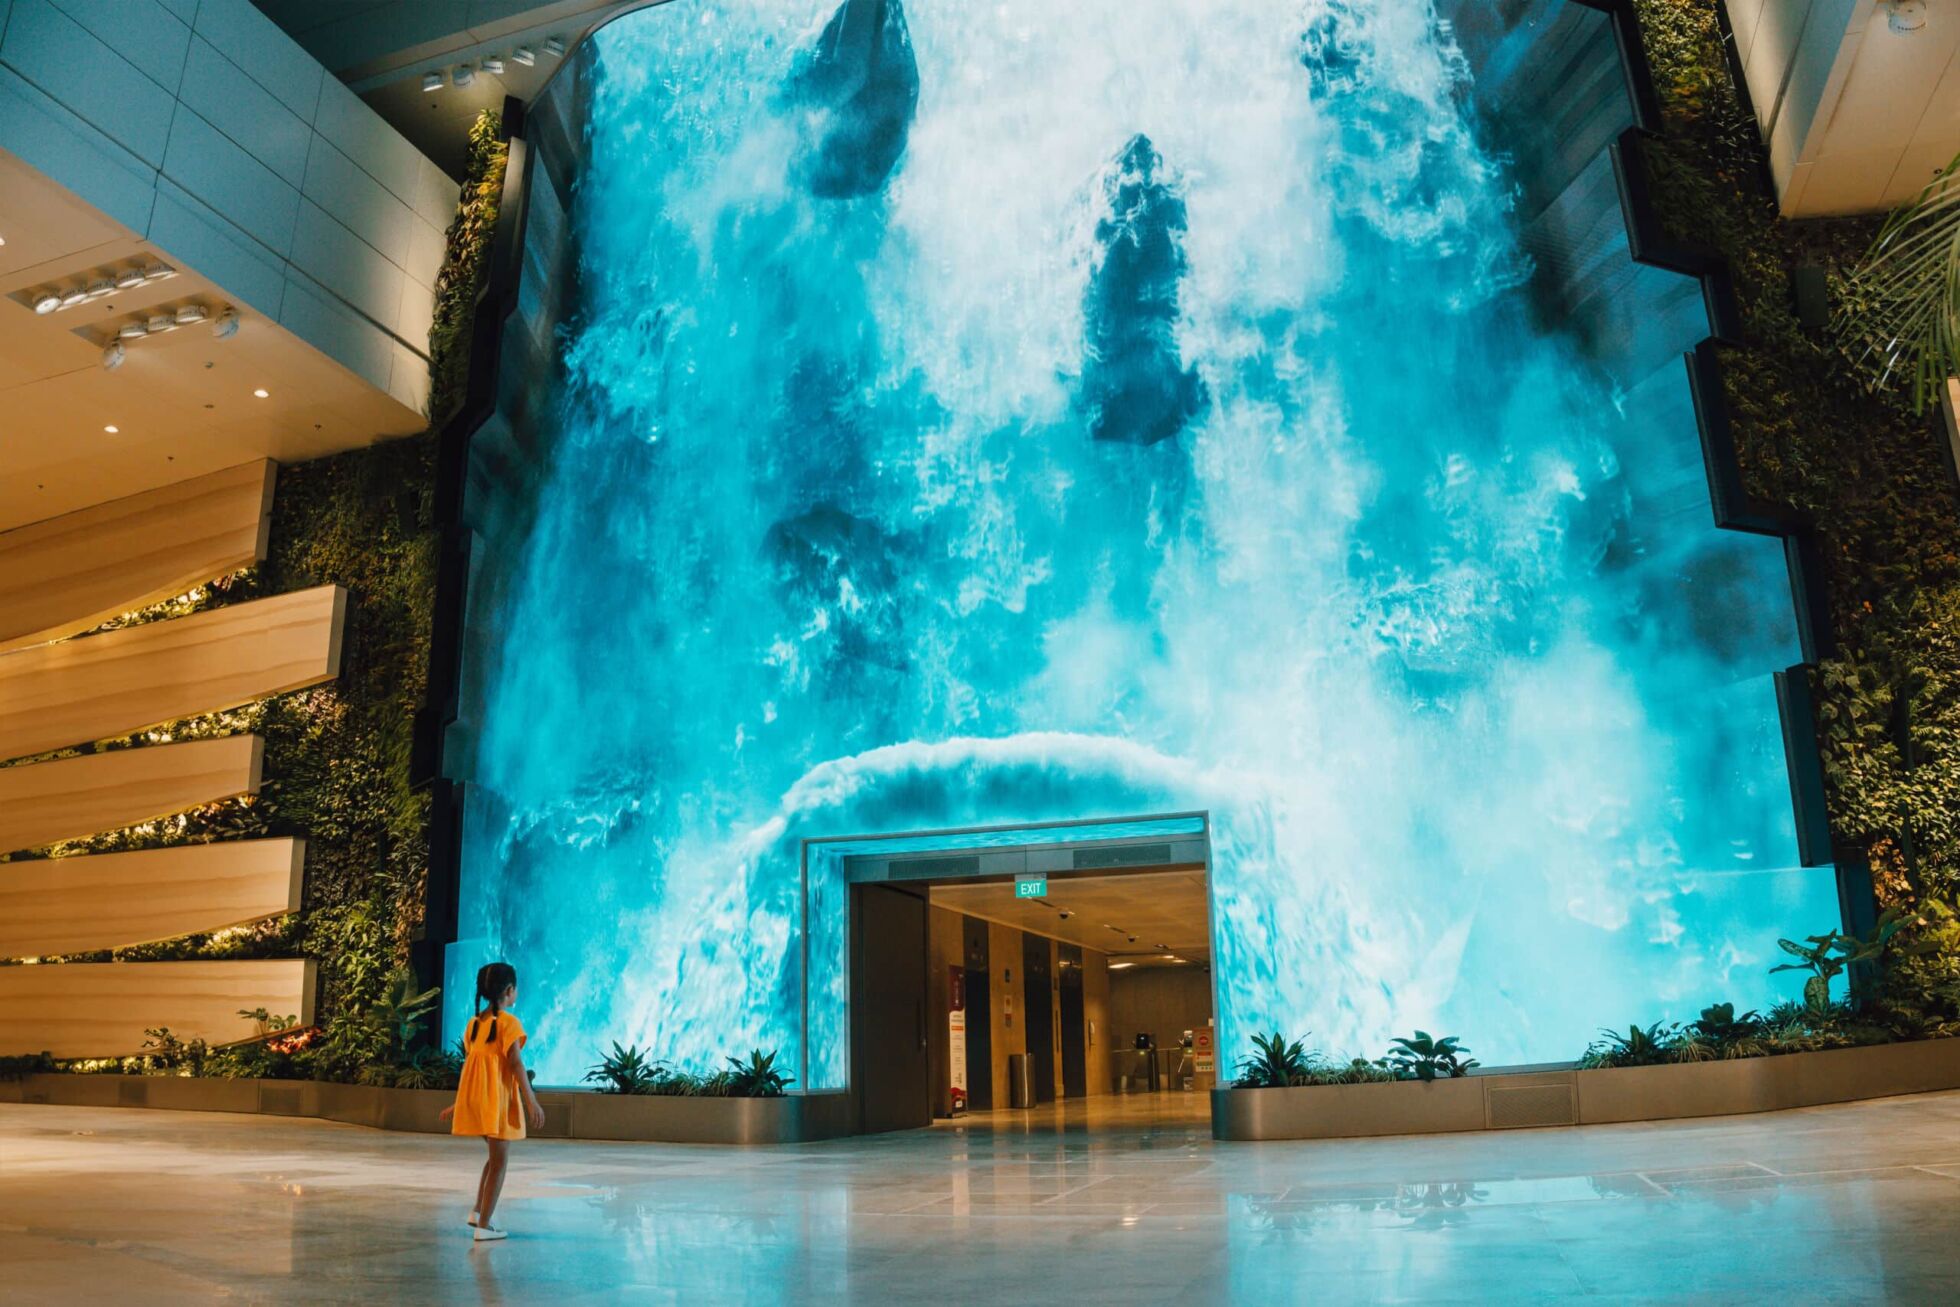 Changi Airport Terminal 2's digital waterfall at the departure gate